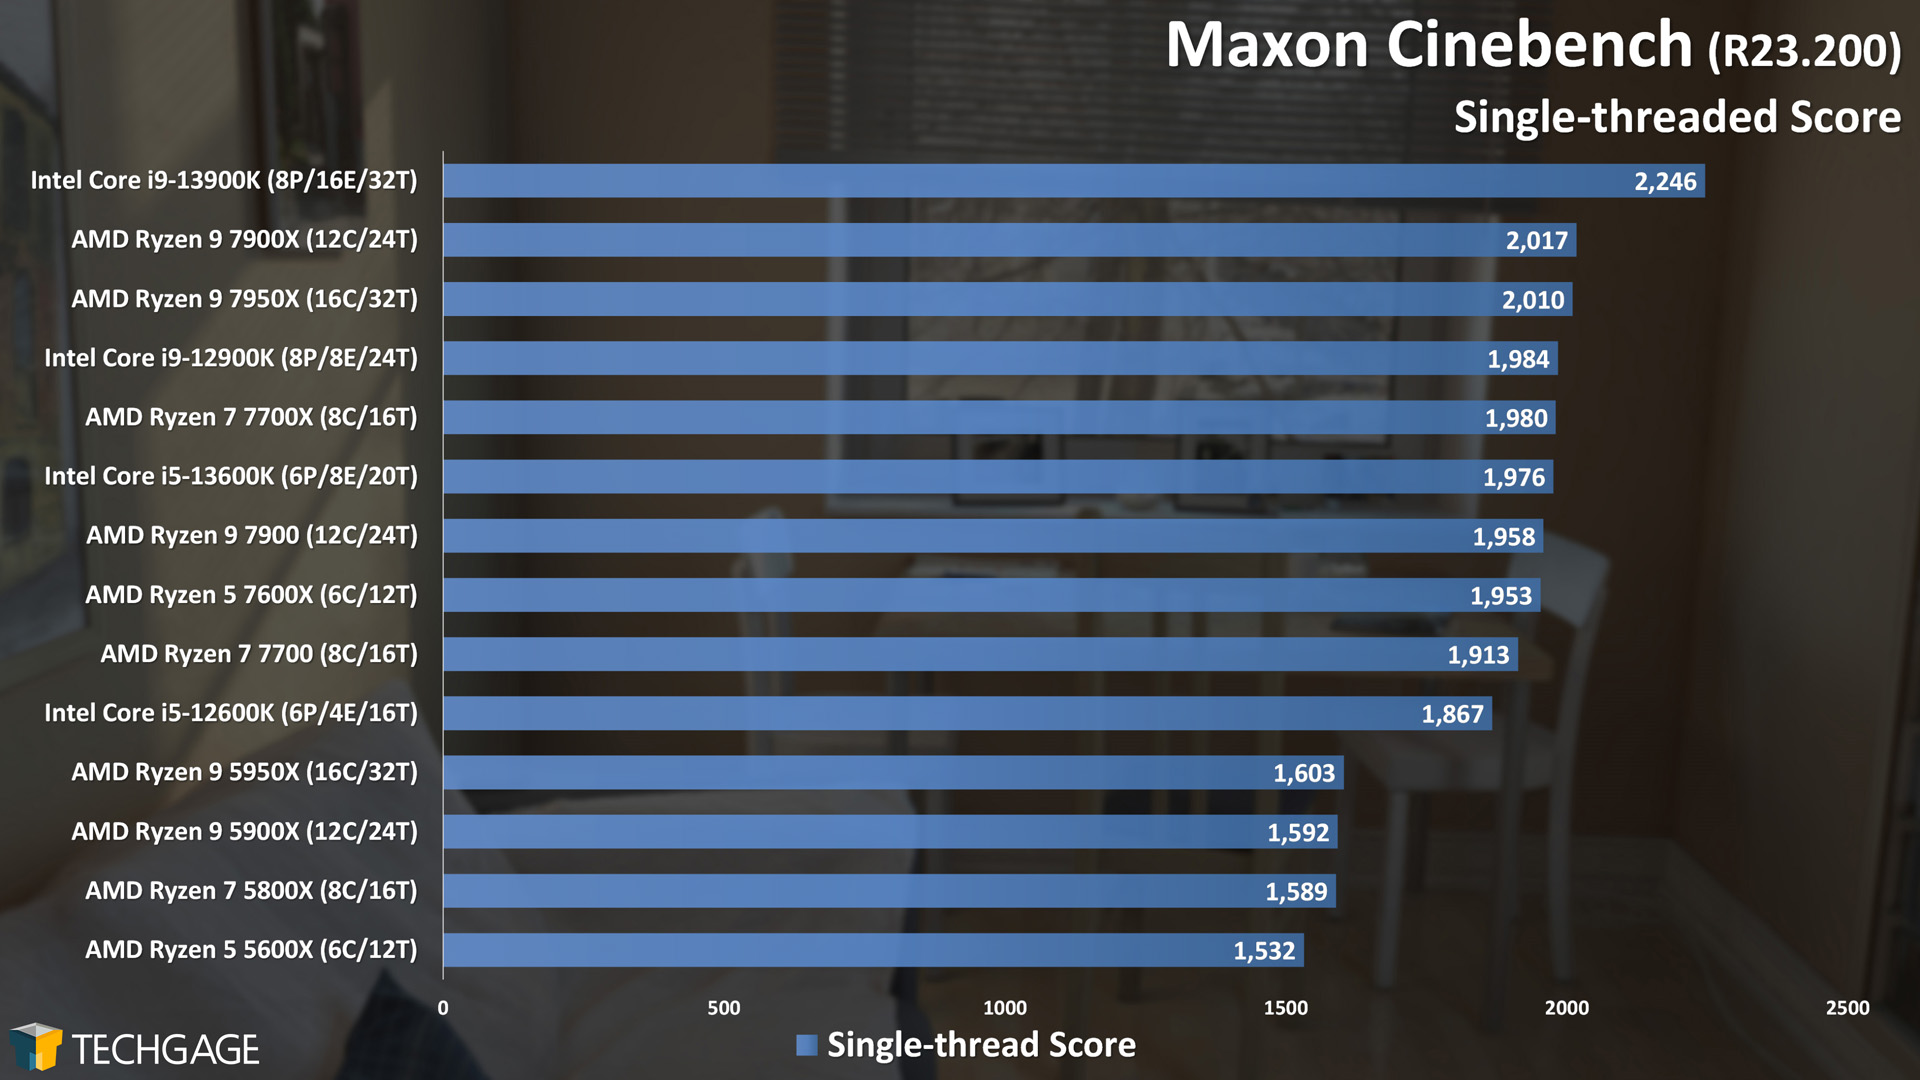 Maxon Cinebench - Single-threaded Score